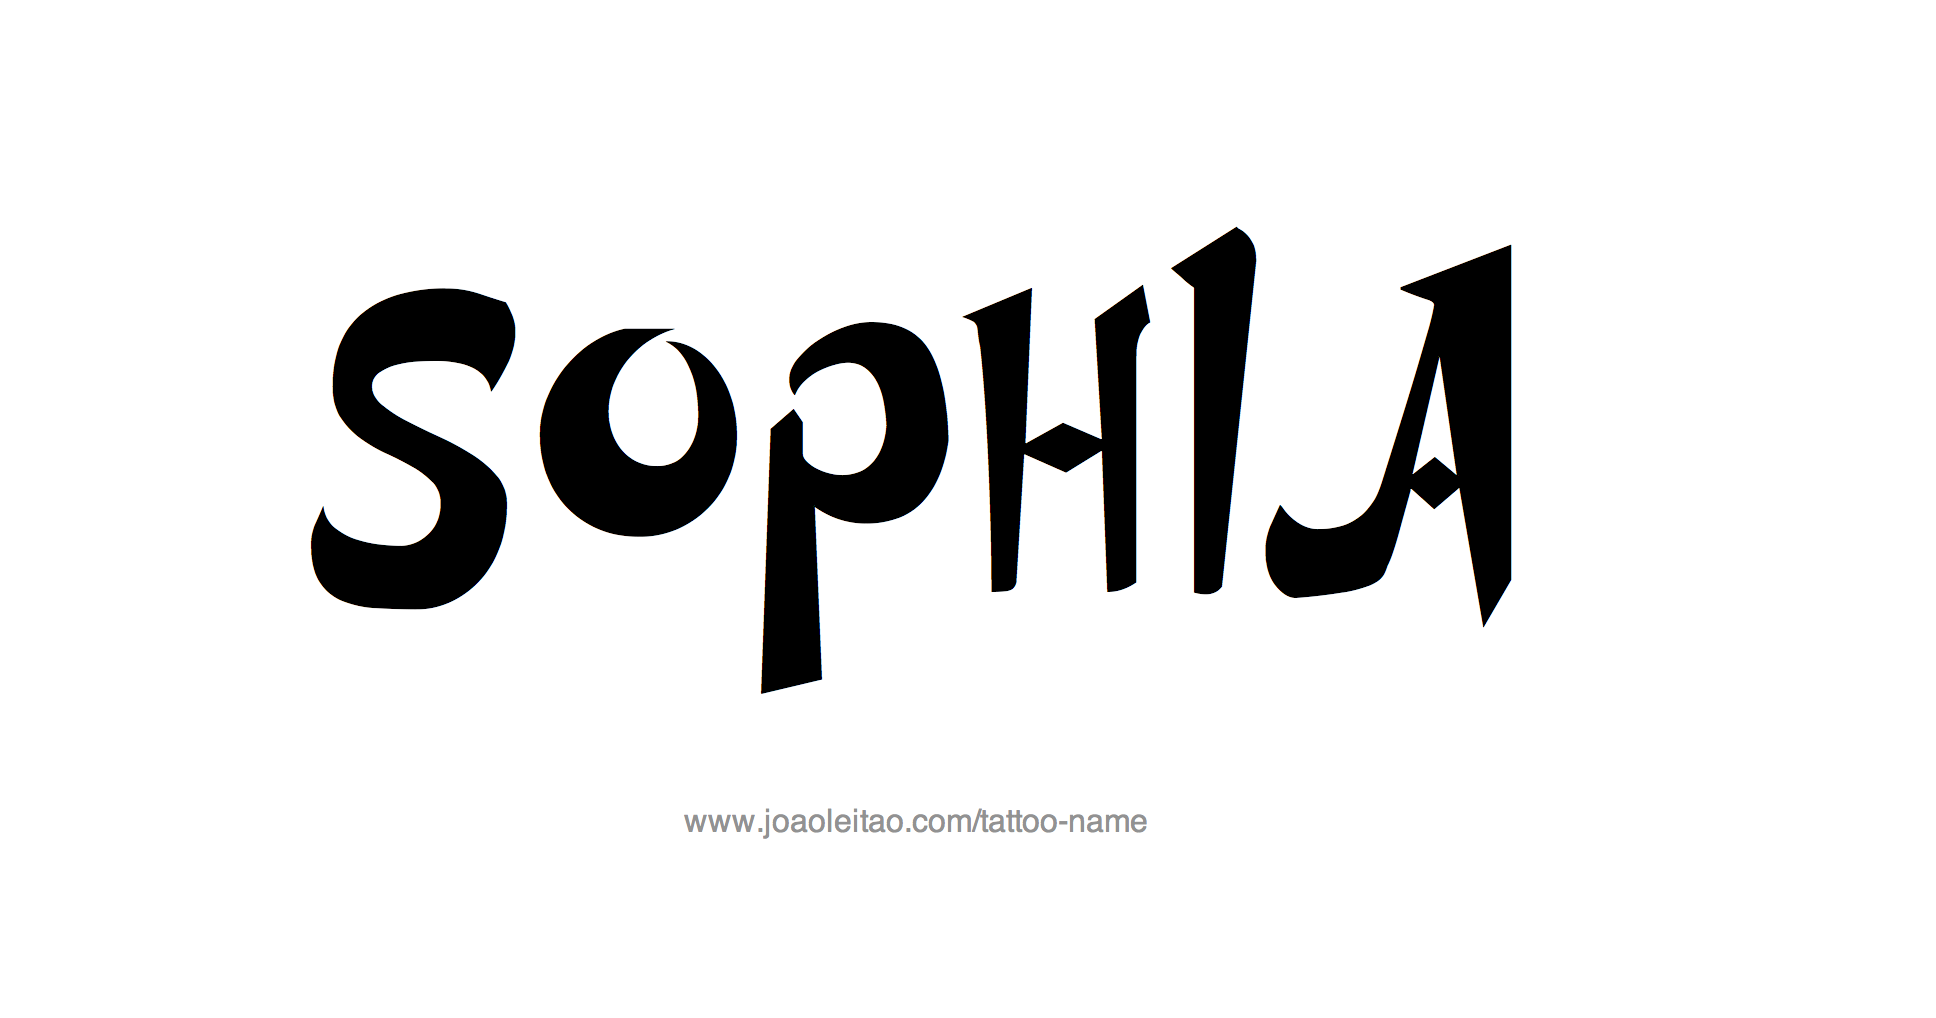 Tattoo Design Name Sophia 